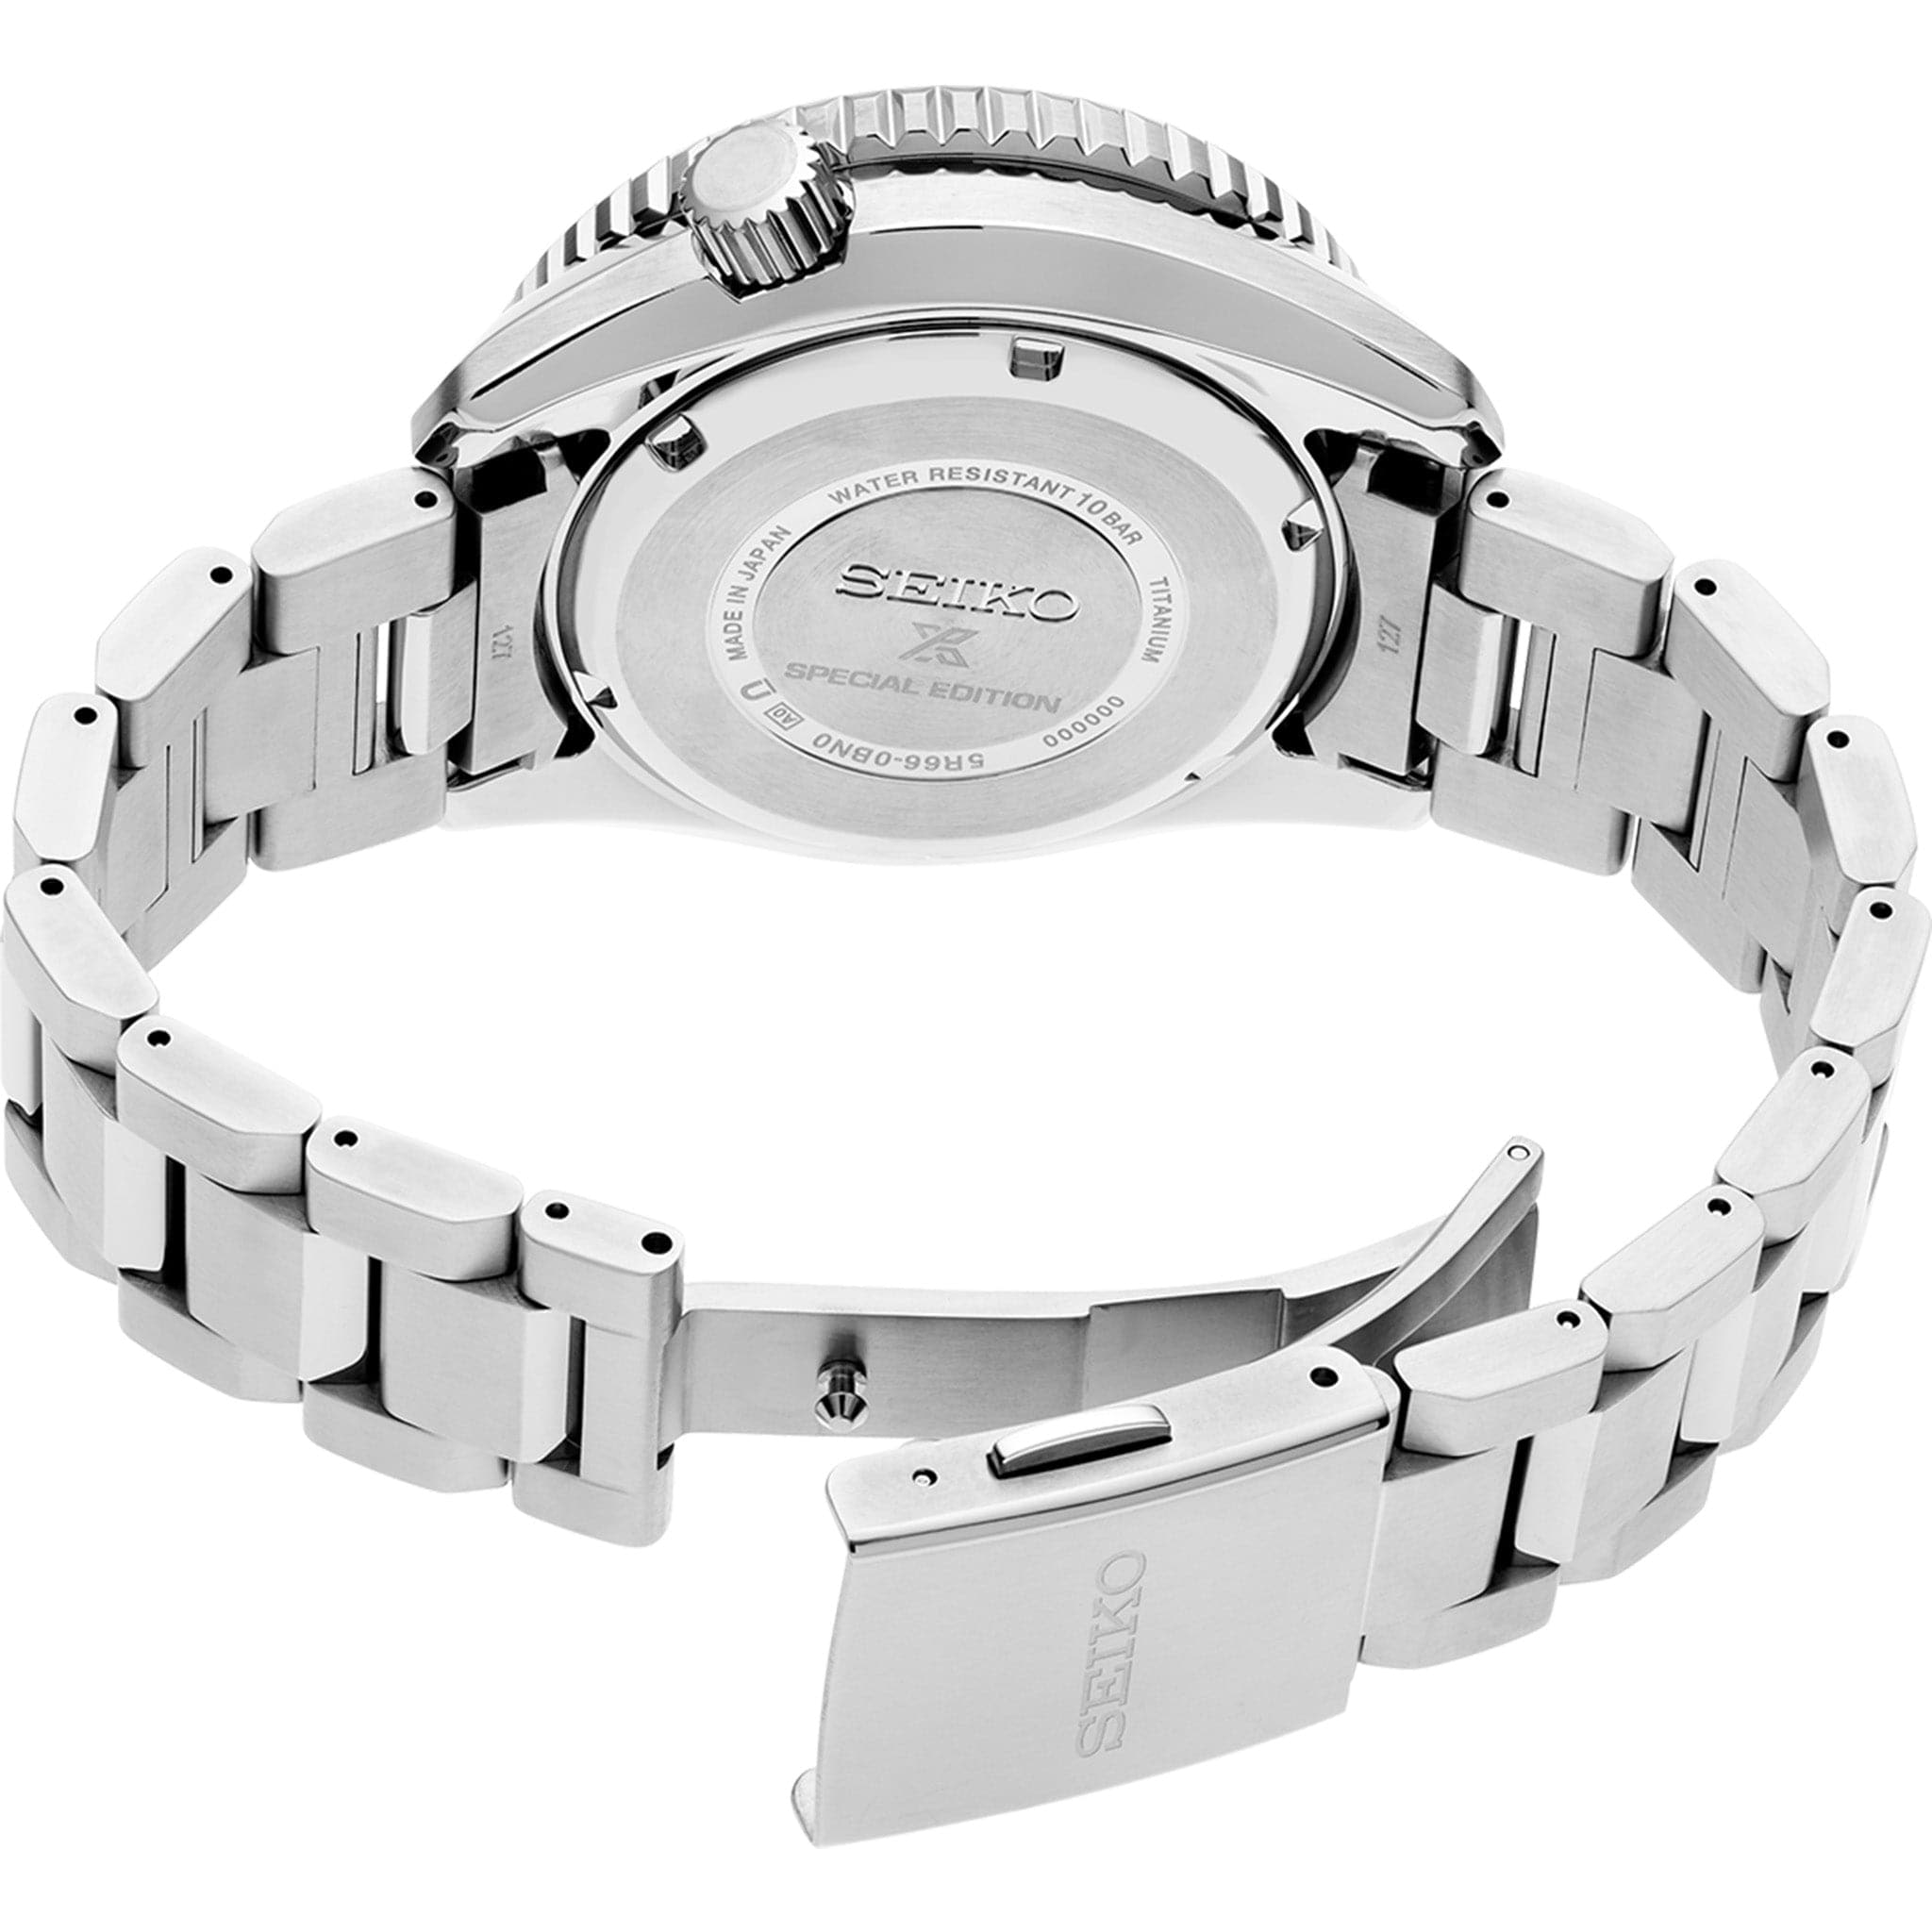 Seiko Prospex LX SNR051 Spring Drive GMT Automatic Watch | Skeie's Jewelers